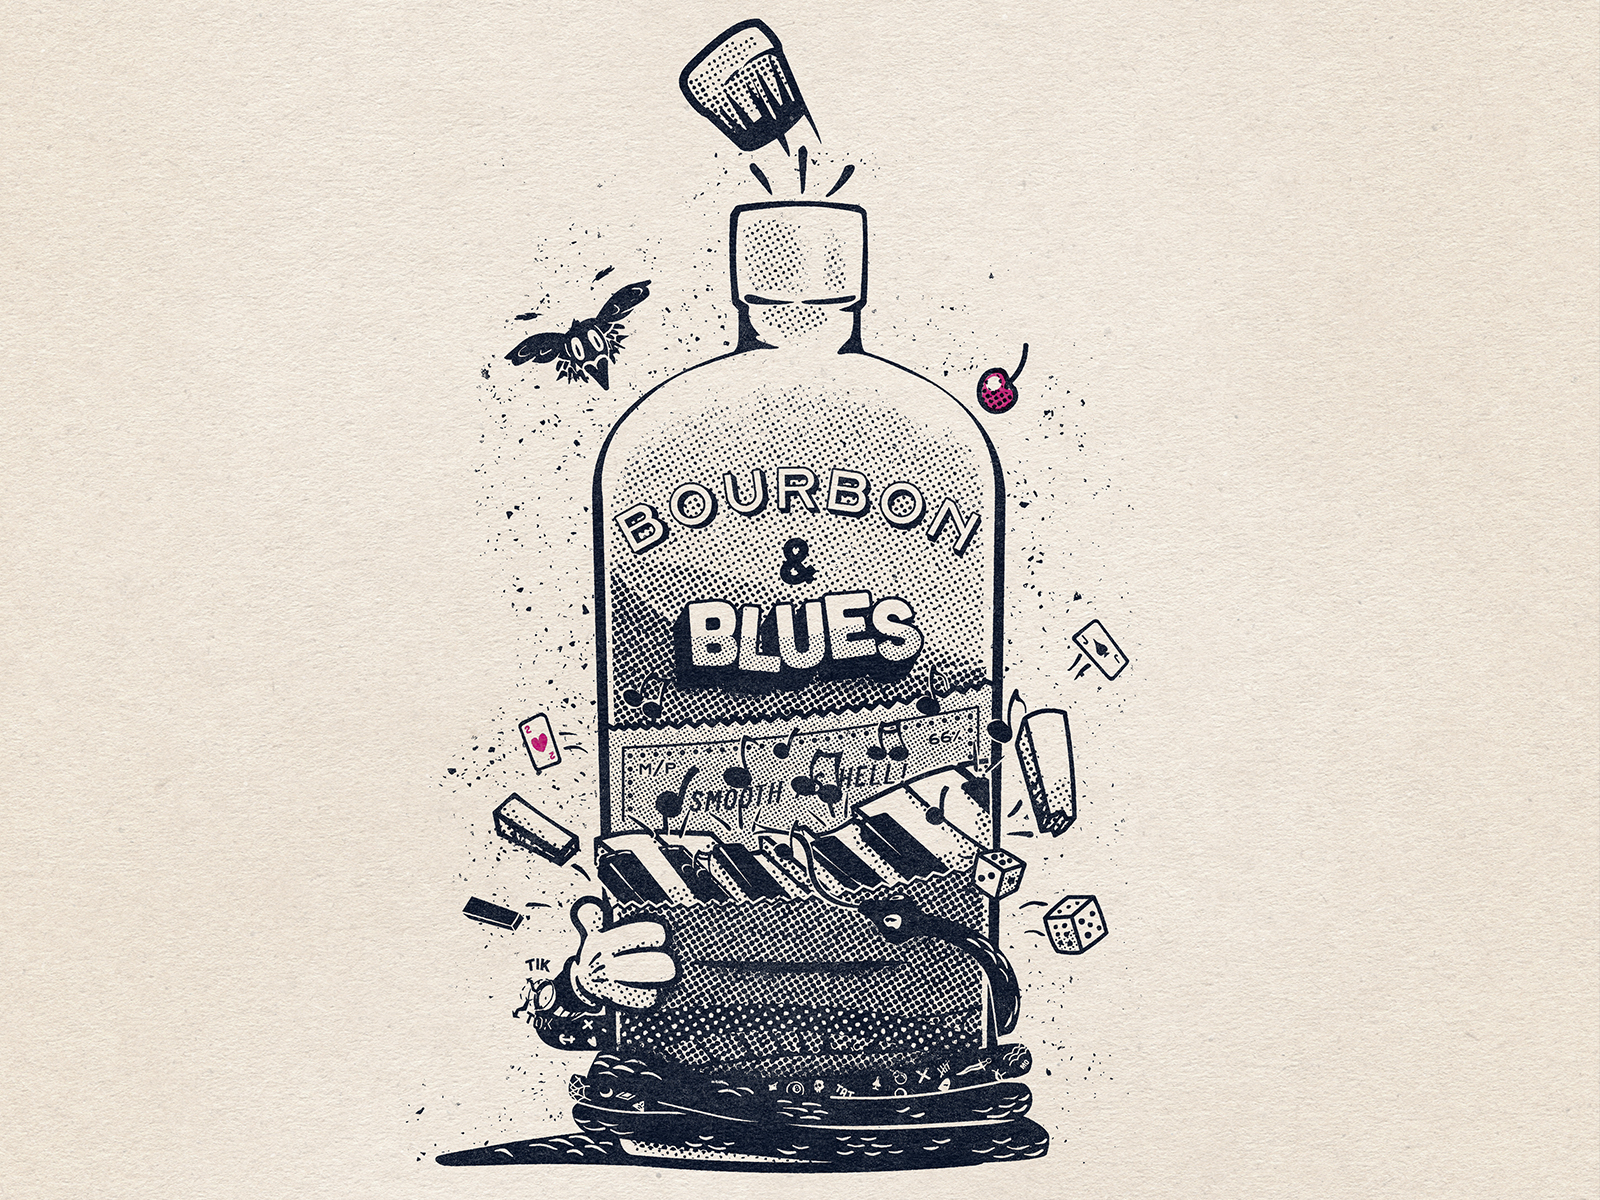 Bourbon & Blues by Vanion Paradis on Dribbble